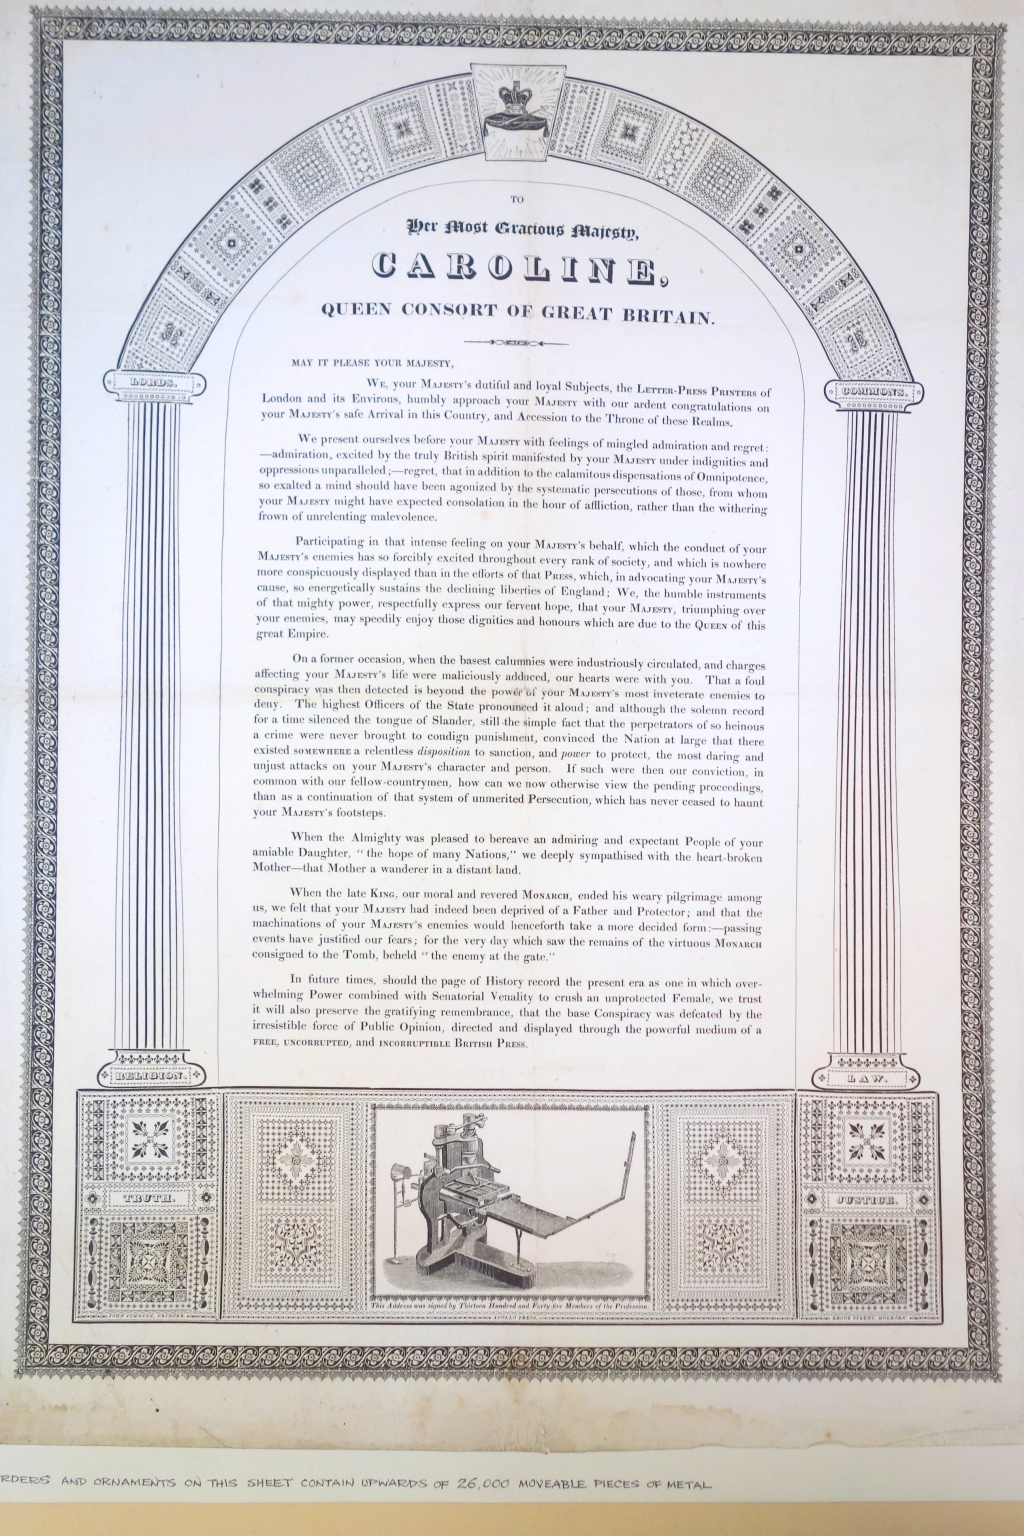 Broadside issued by the Letterpress Printers of London